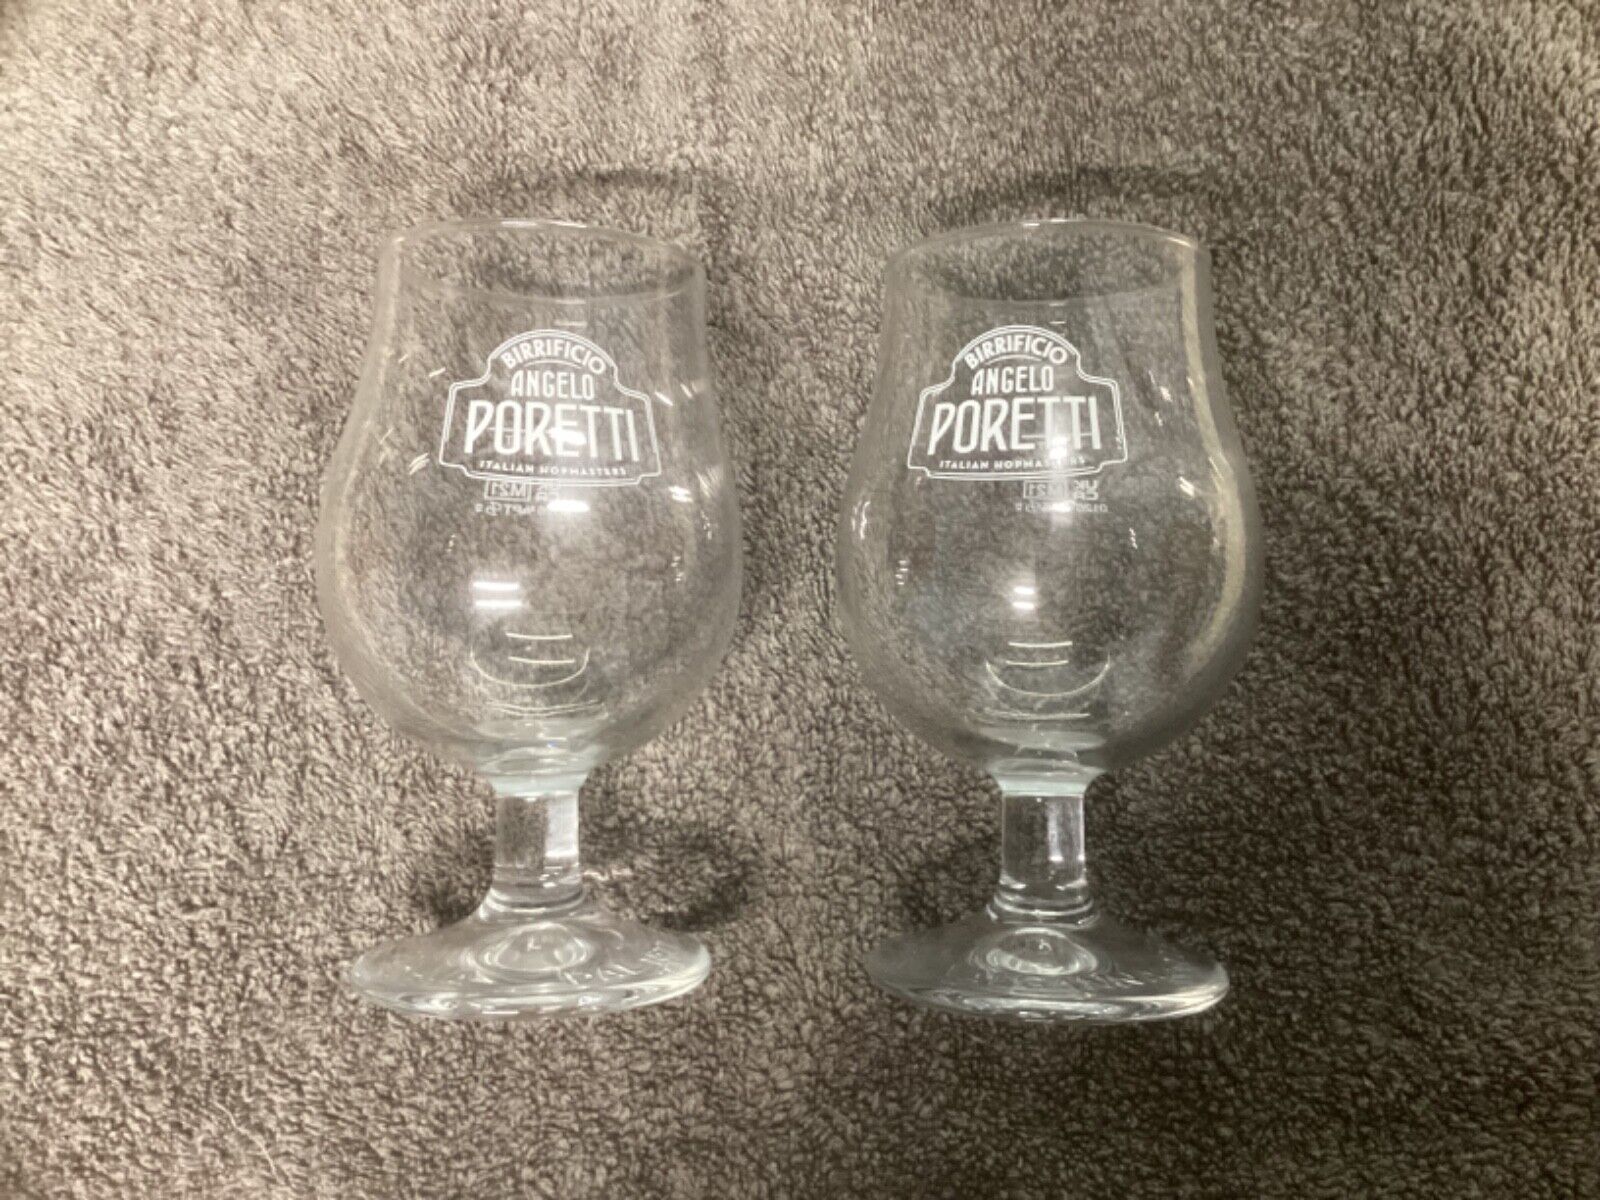 Pair (2) of Genuine Angelo Poretti Half Pint Goblets - New & Unused - UK CA Mark